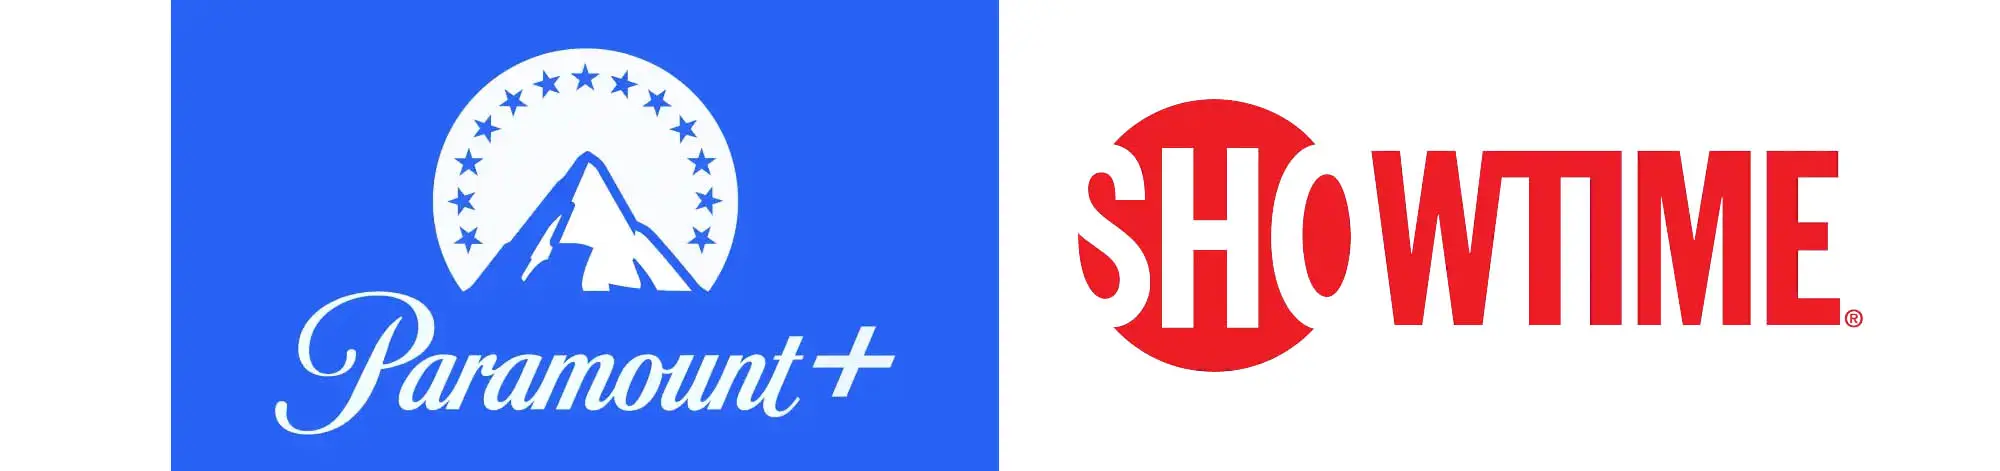 Paramount+ & Showtime logos